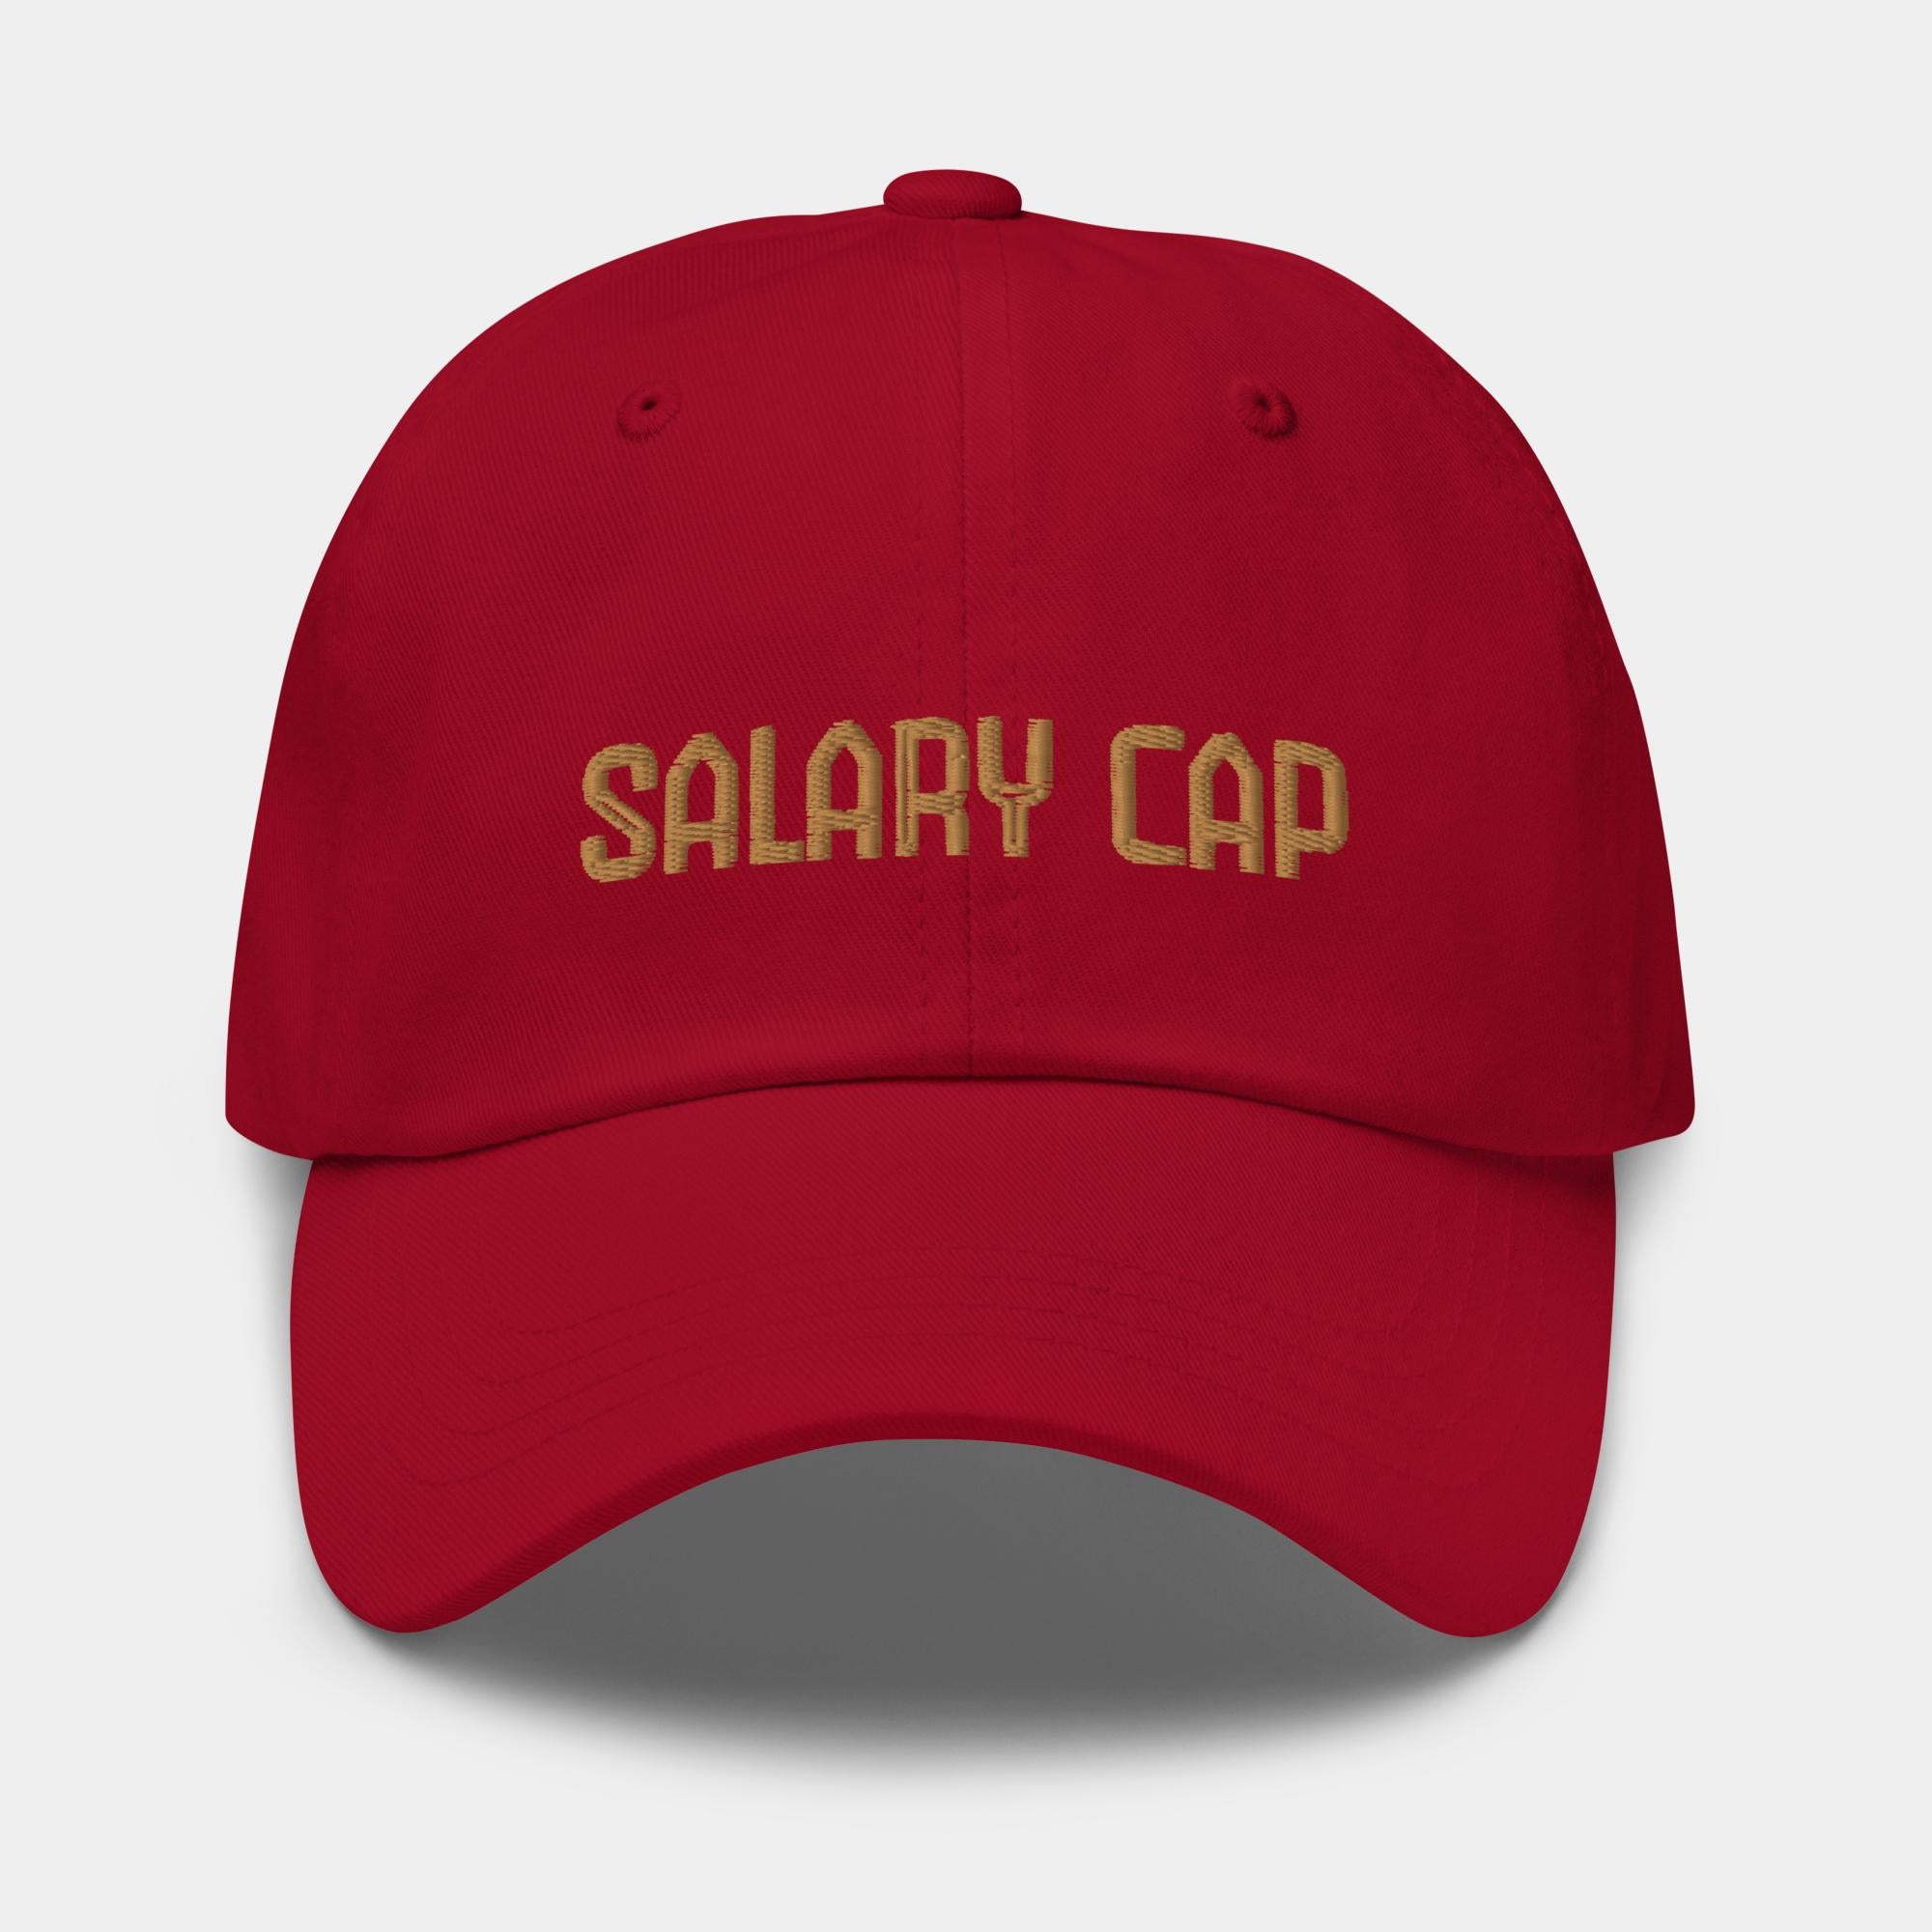 The North American Salary Cap